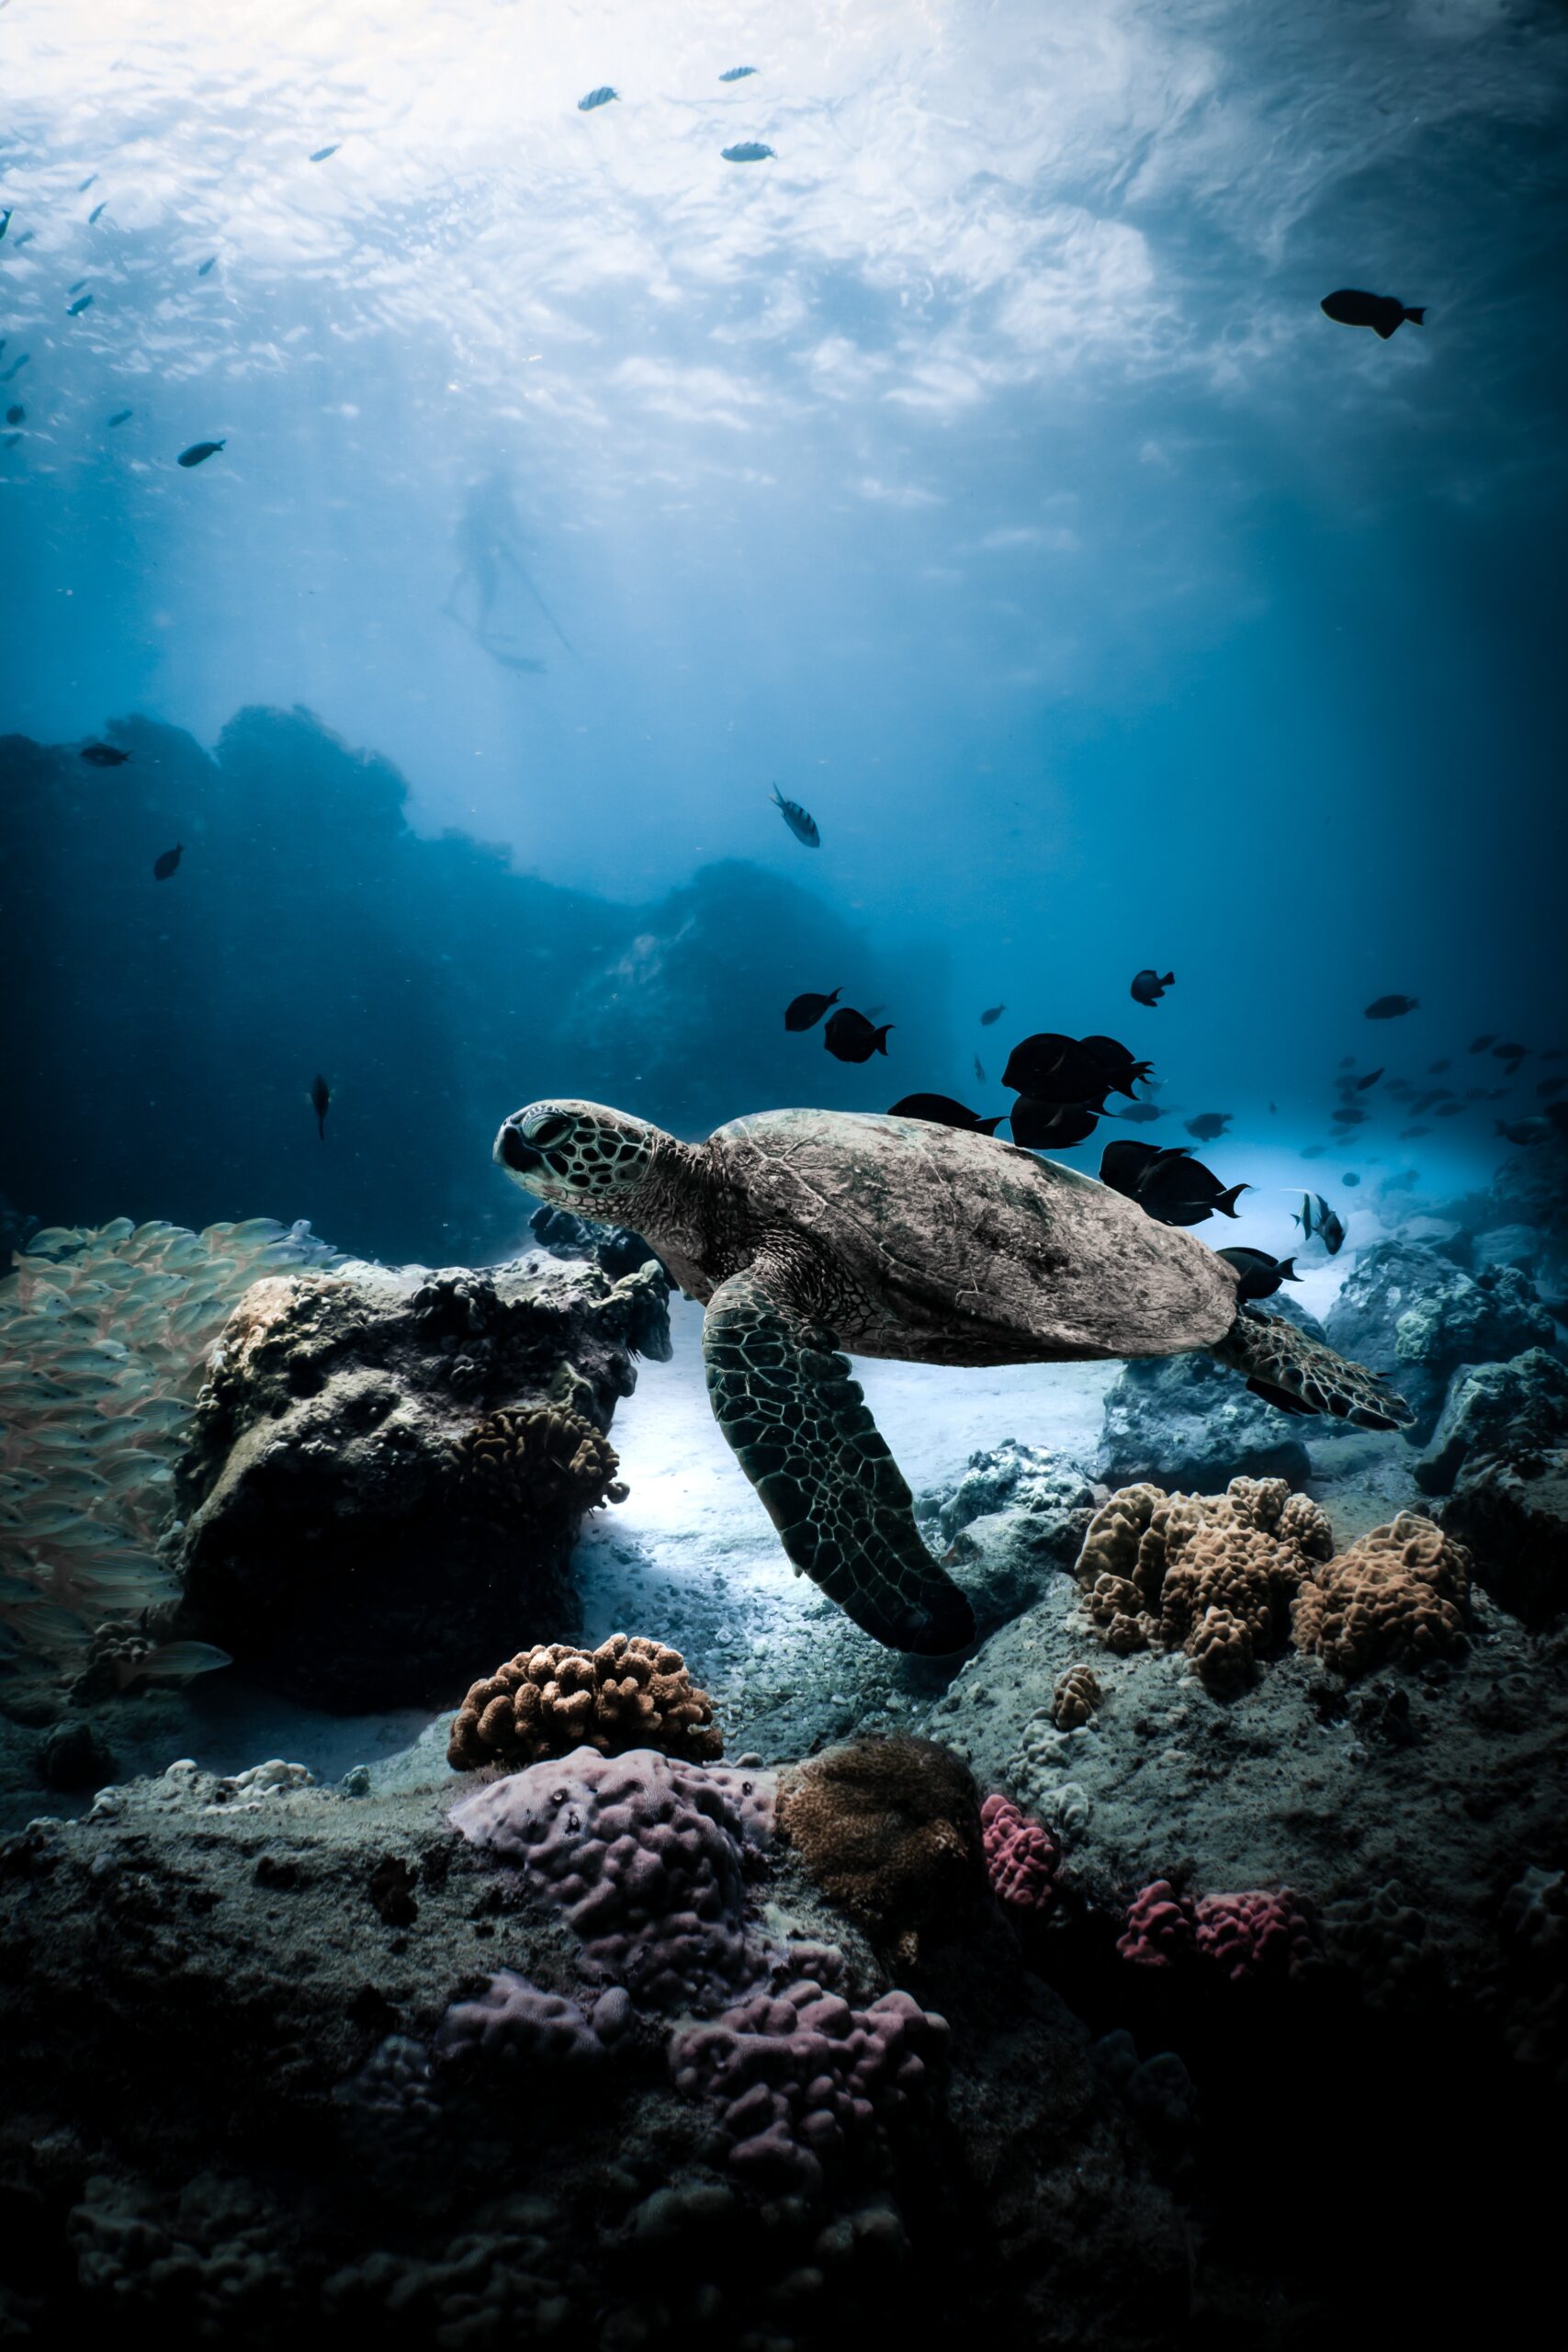 Brown and black turtle under water